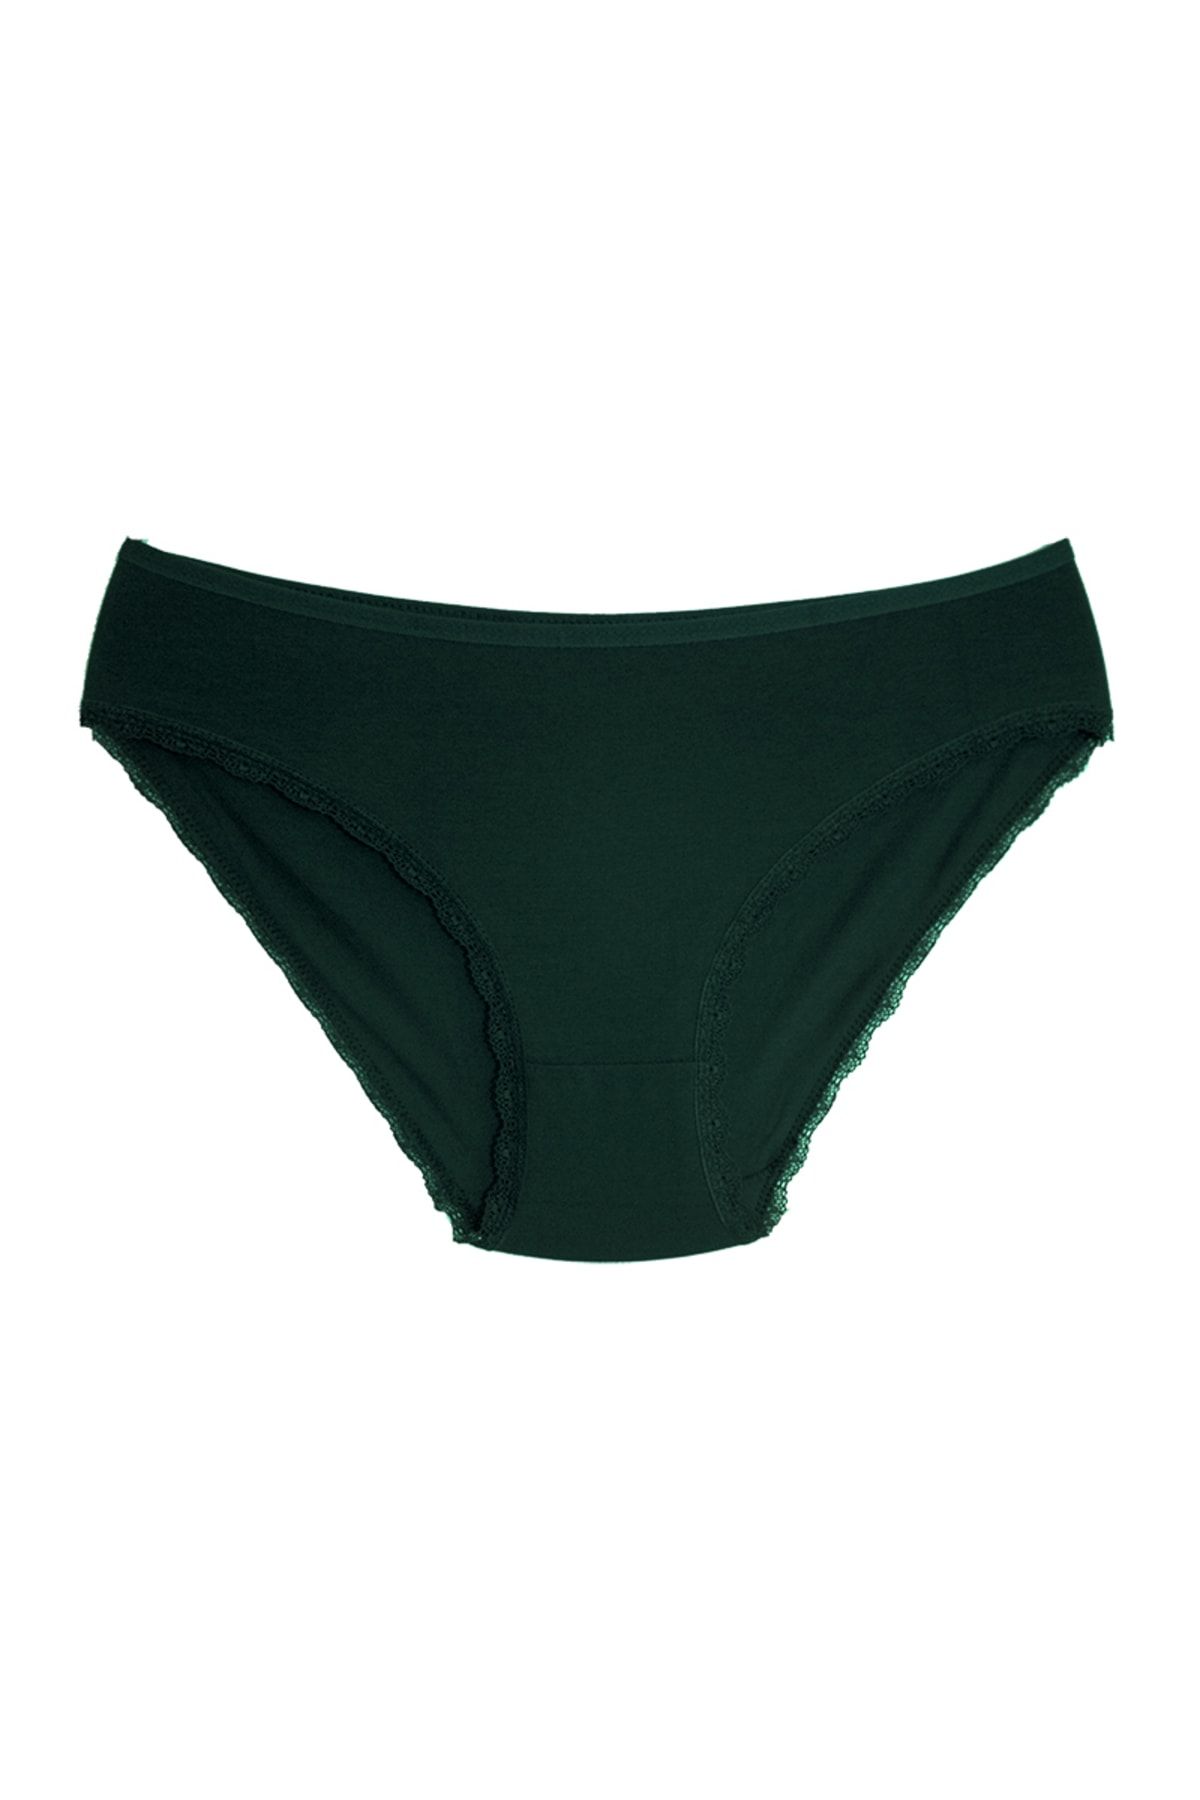 ALYA UNDERWEAR Women's Dark Green Tone Lace Bato/hipster Panties-heart-striped-plain  (xl,2xl,3xl,4xl)-7 Pieces/pkt - Trendyol